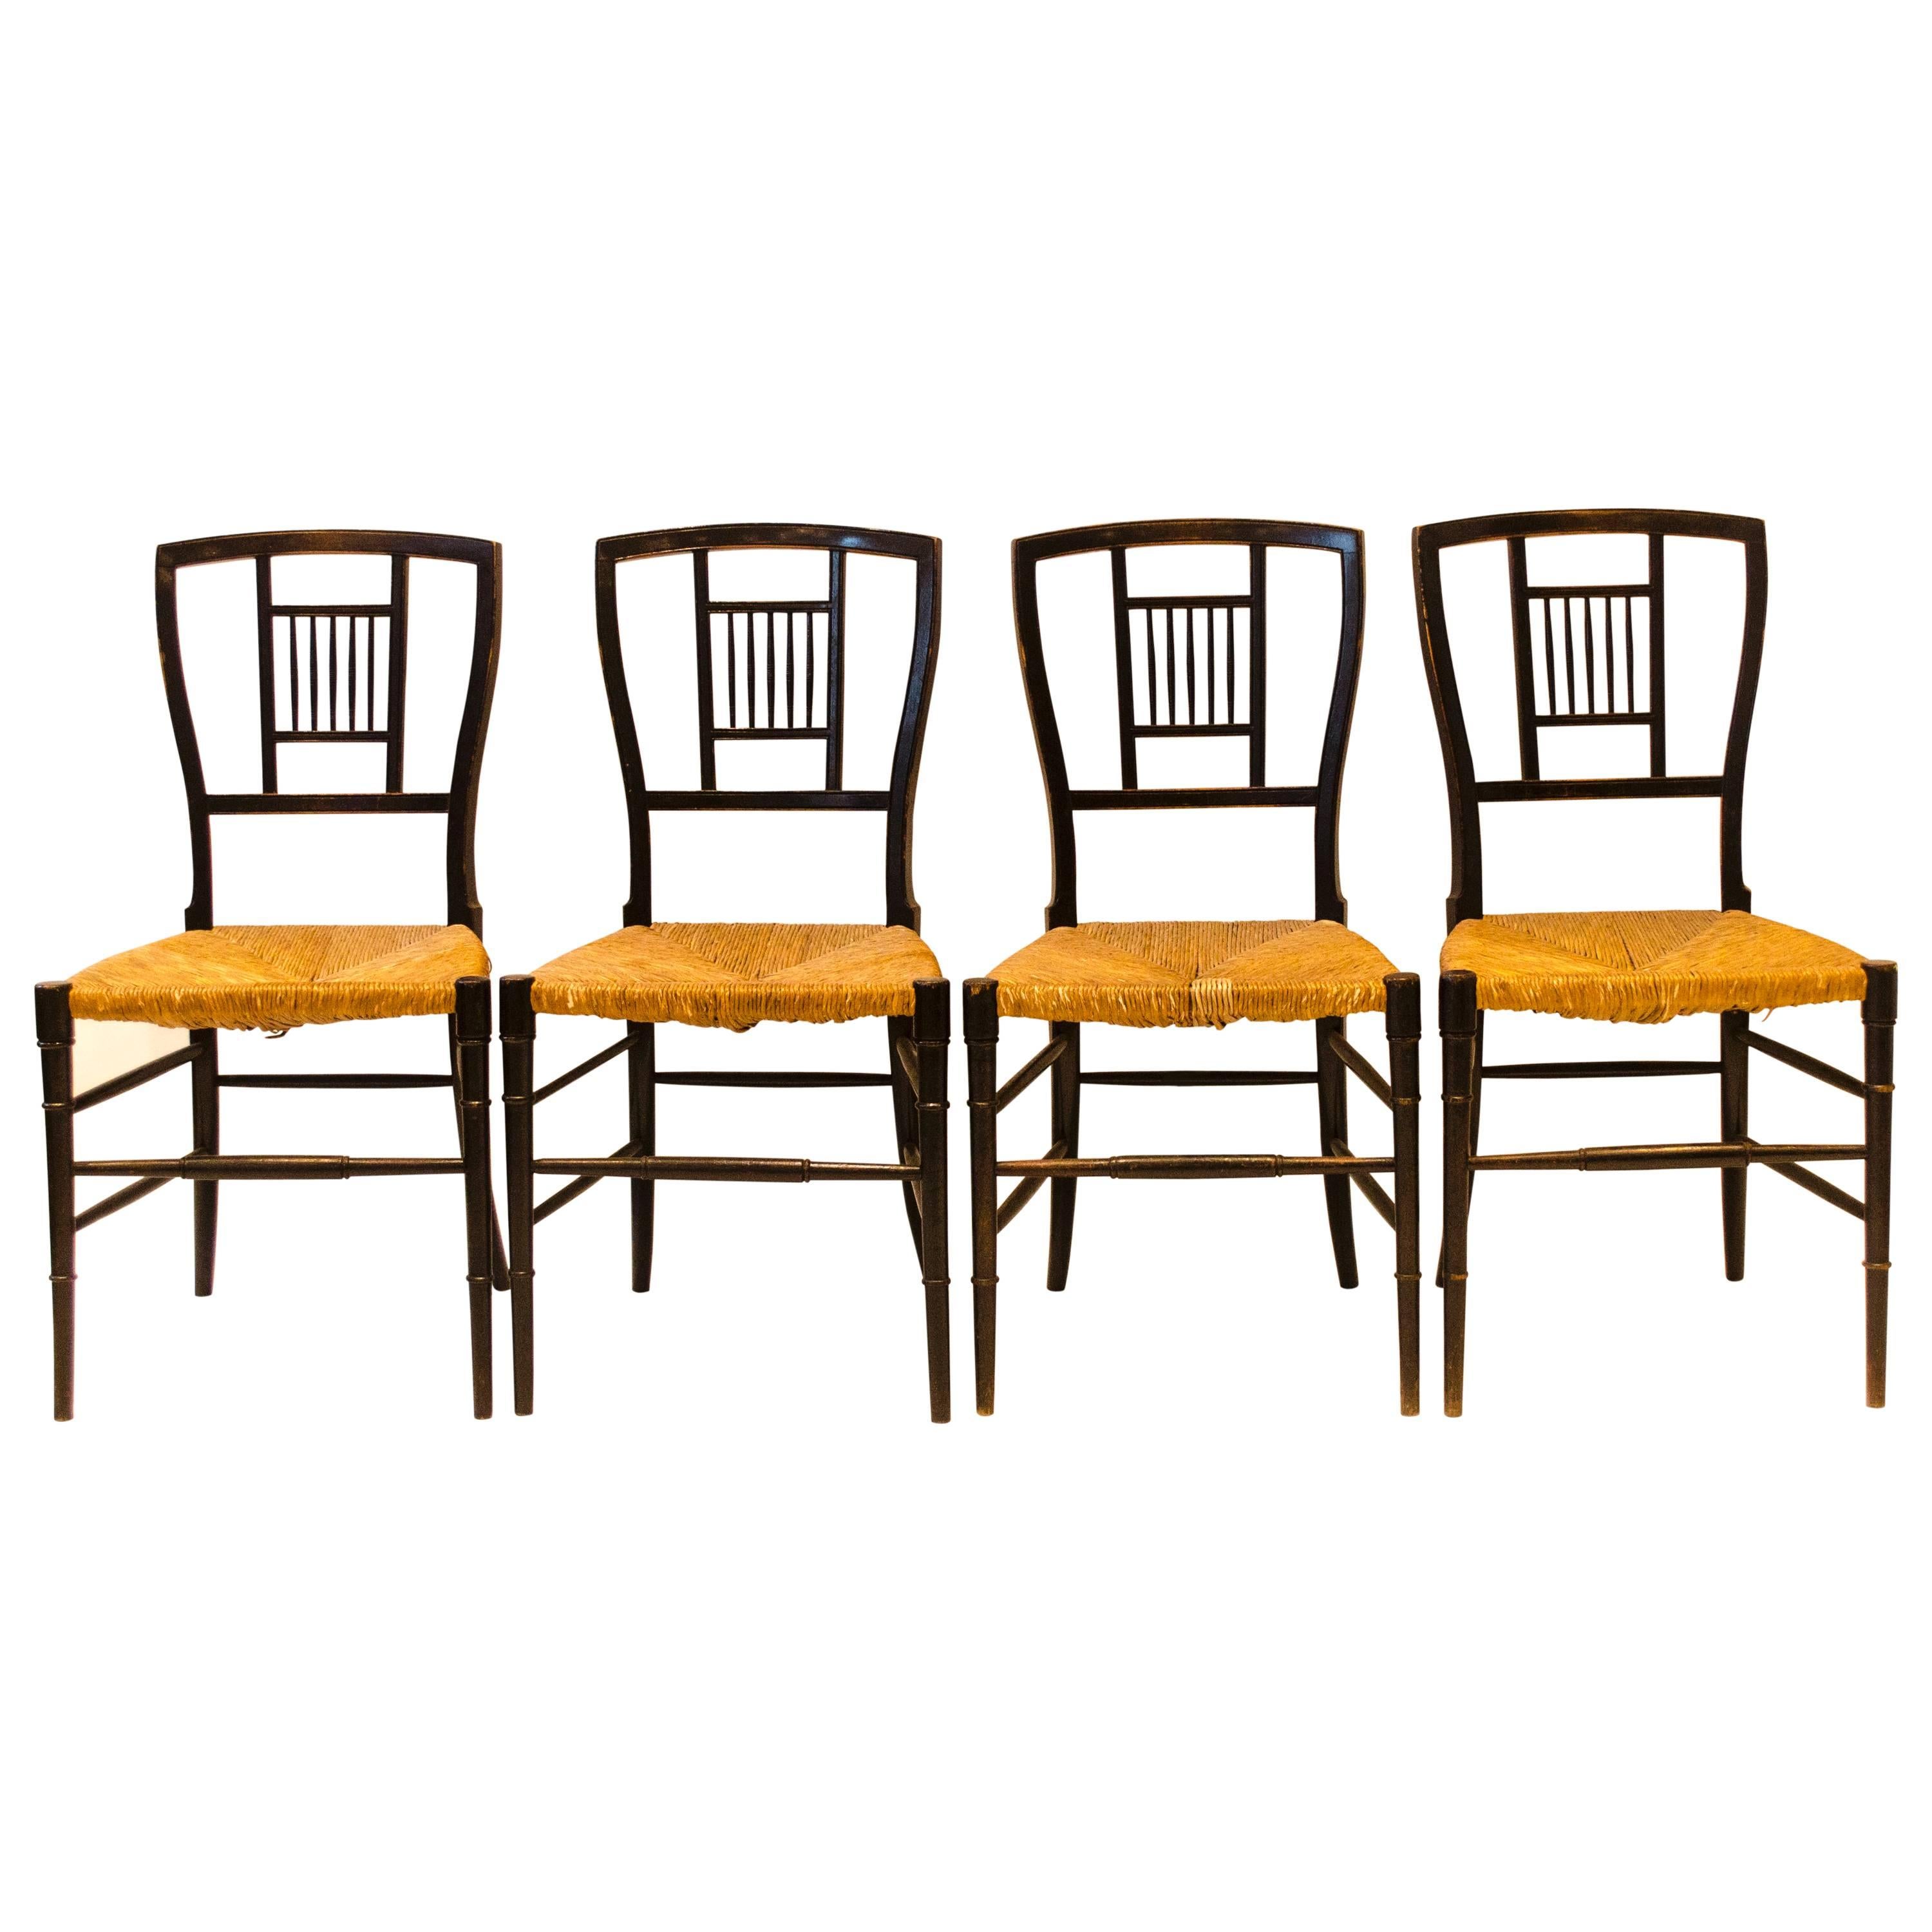 E W Godwin. A Set of Four Anglo-Japanese Ebonised Rush Seat Chairs